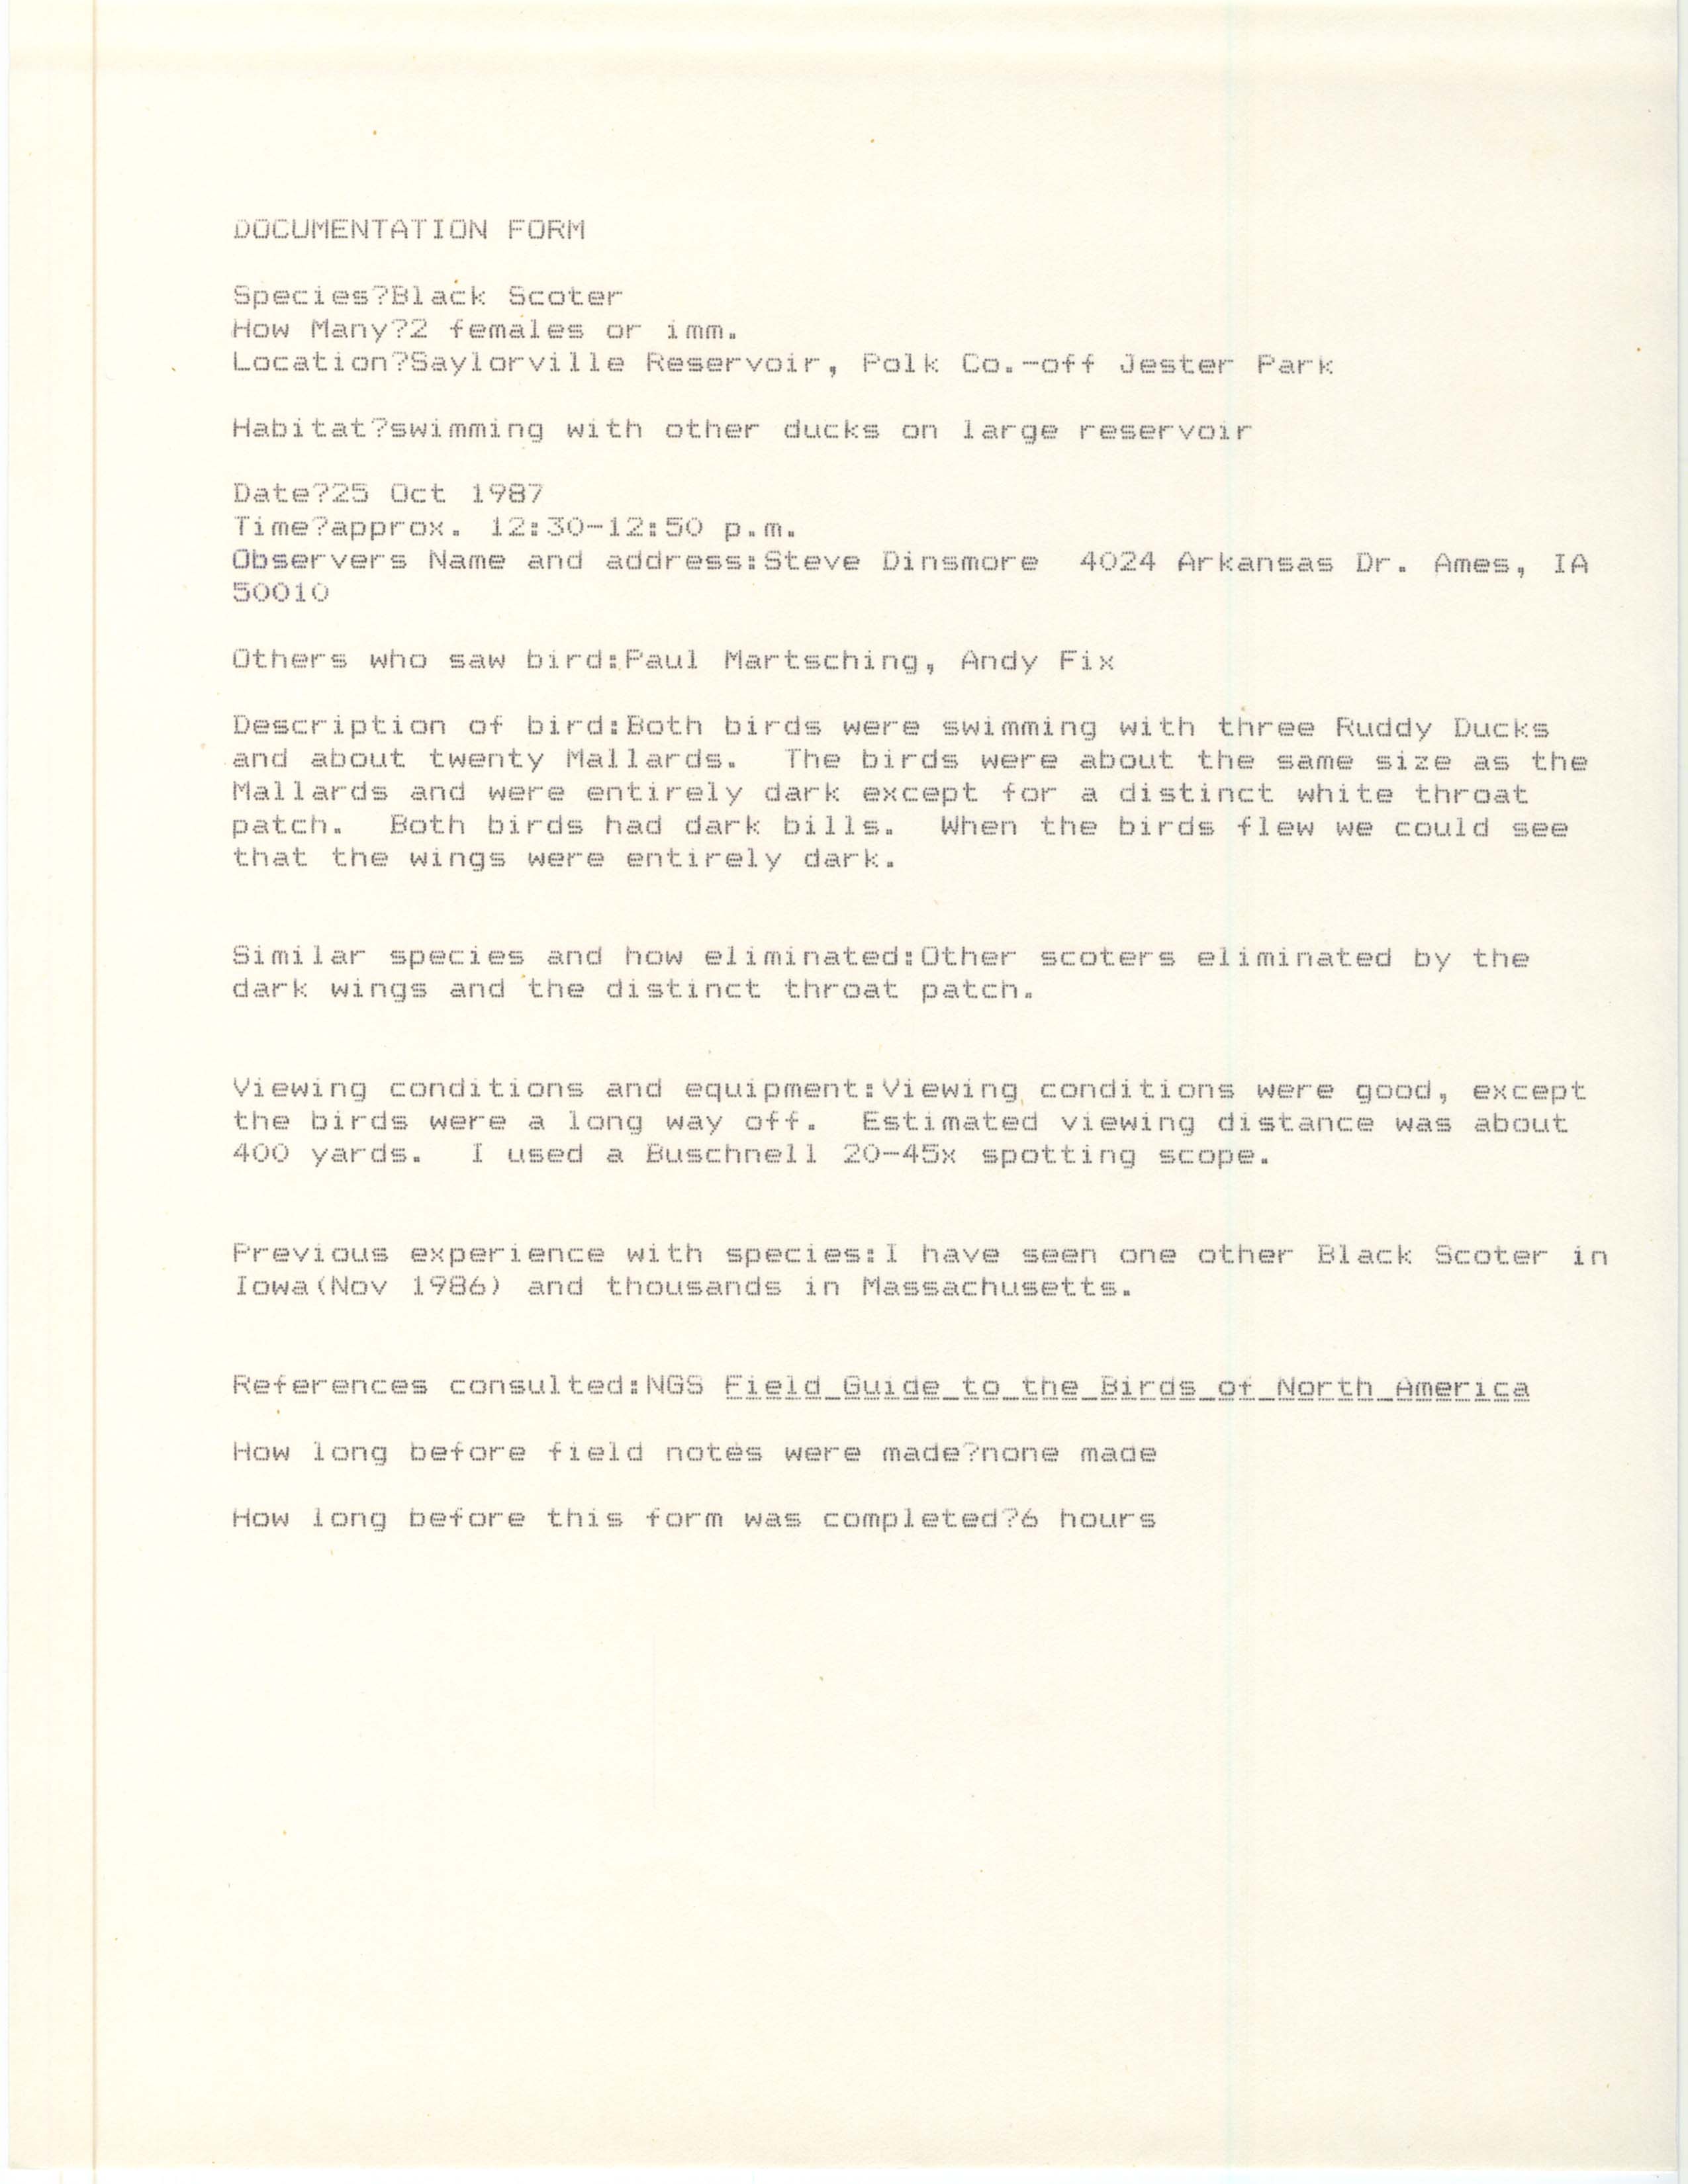 Rare bird documentation form for Black Scoter at Saylorville Reservoir, 1987